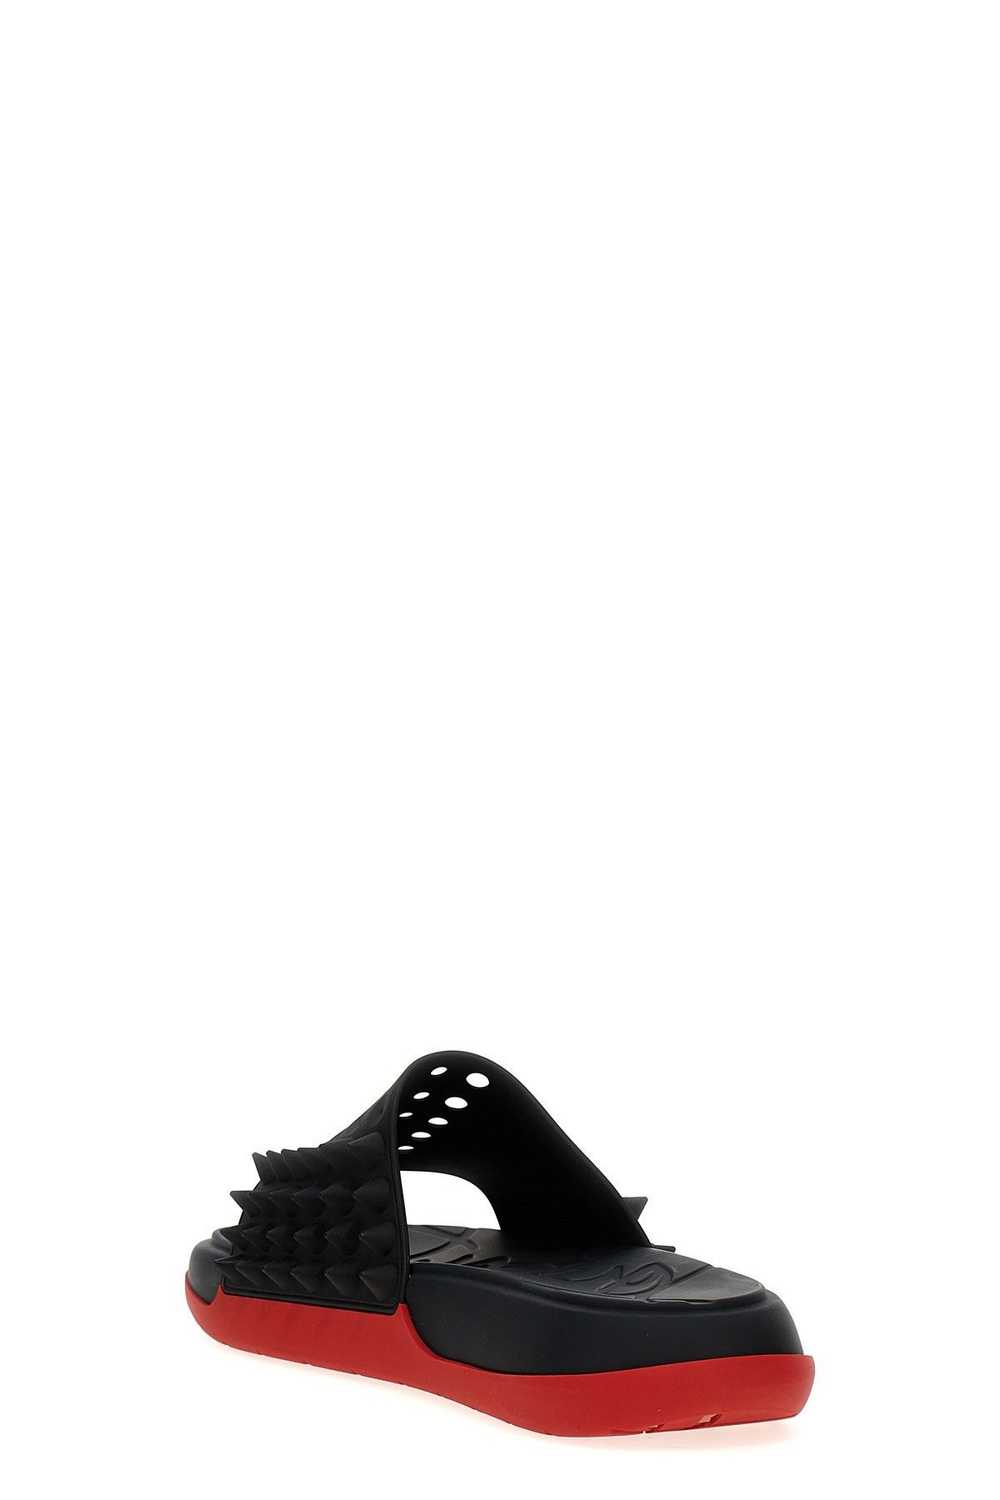 Christian Louboutin 'Take It Easy' sandals - image 2